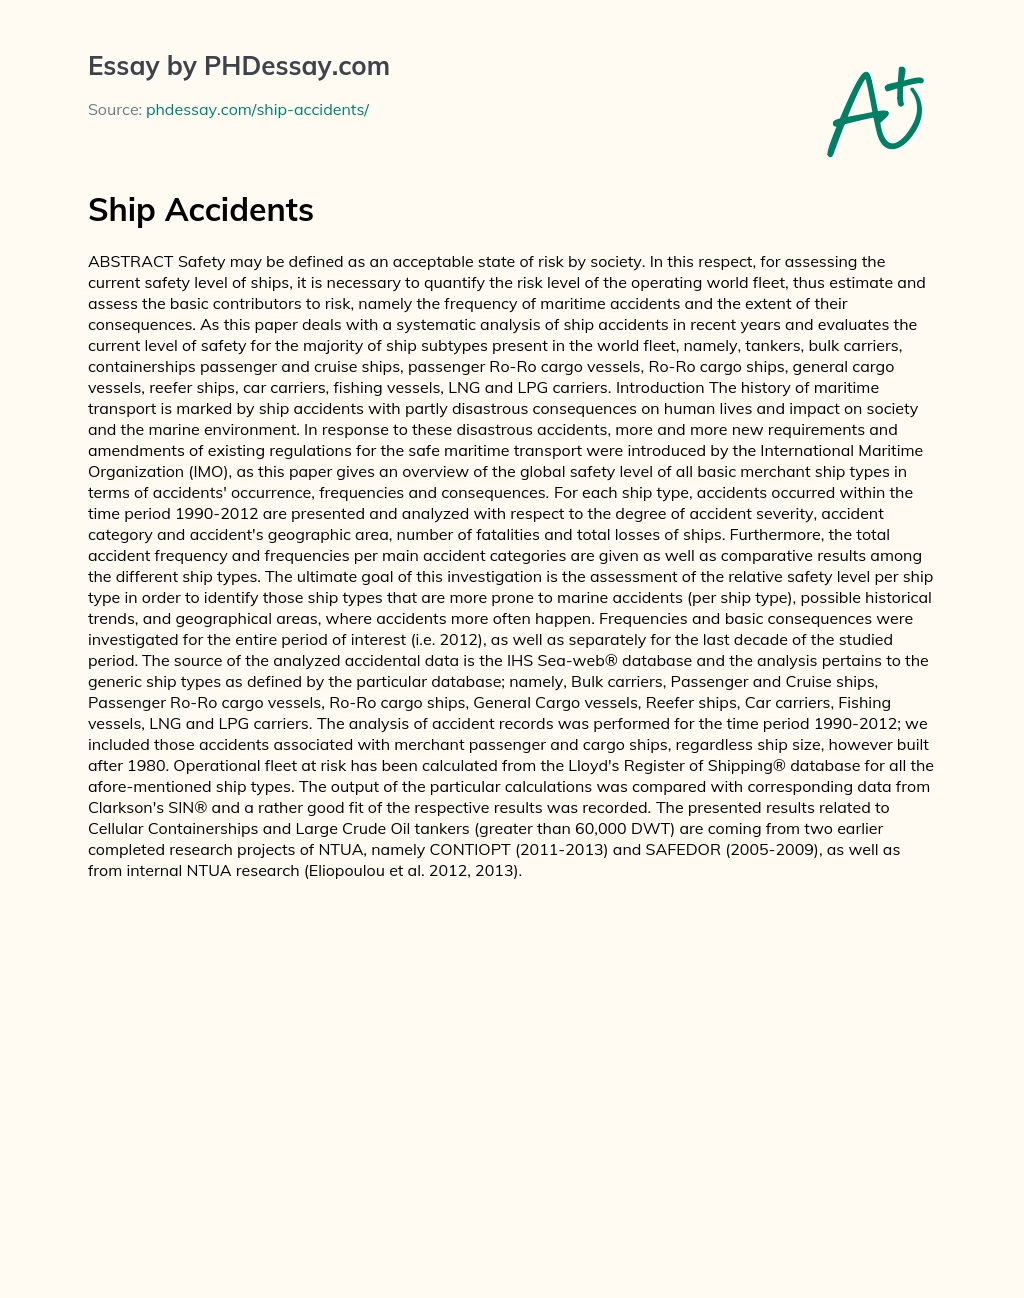 Ship Accidents Report Essay Example Words Phdessay Com